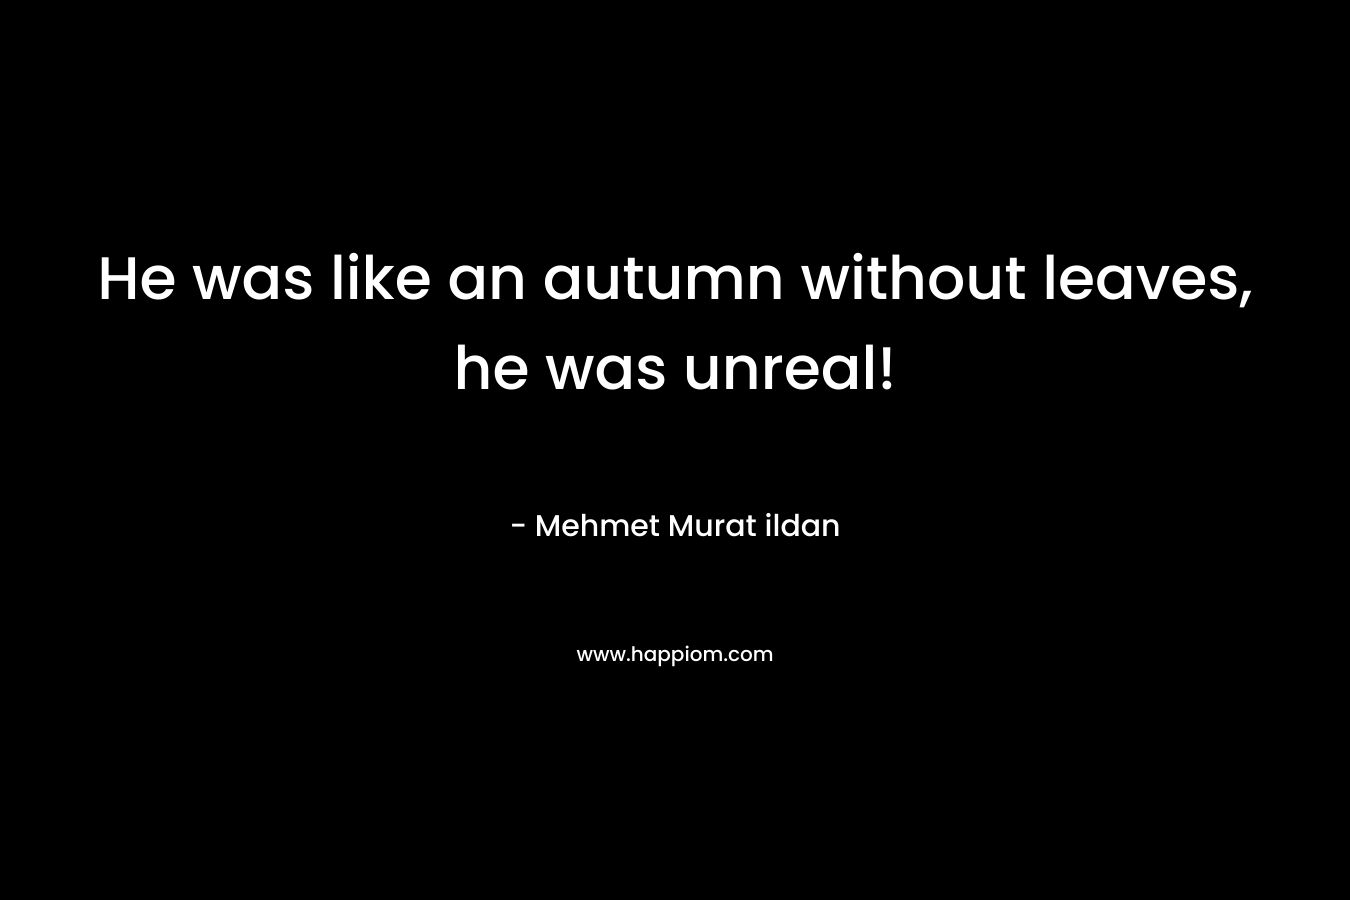 He was like an autumn without leaves, he was unreal! – Mehmet Murat ildan